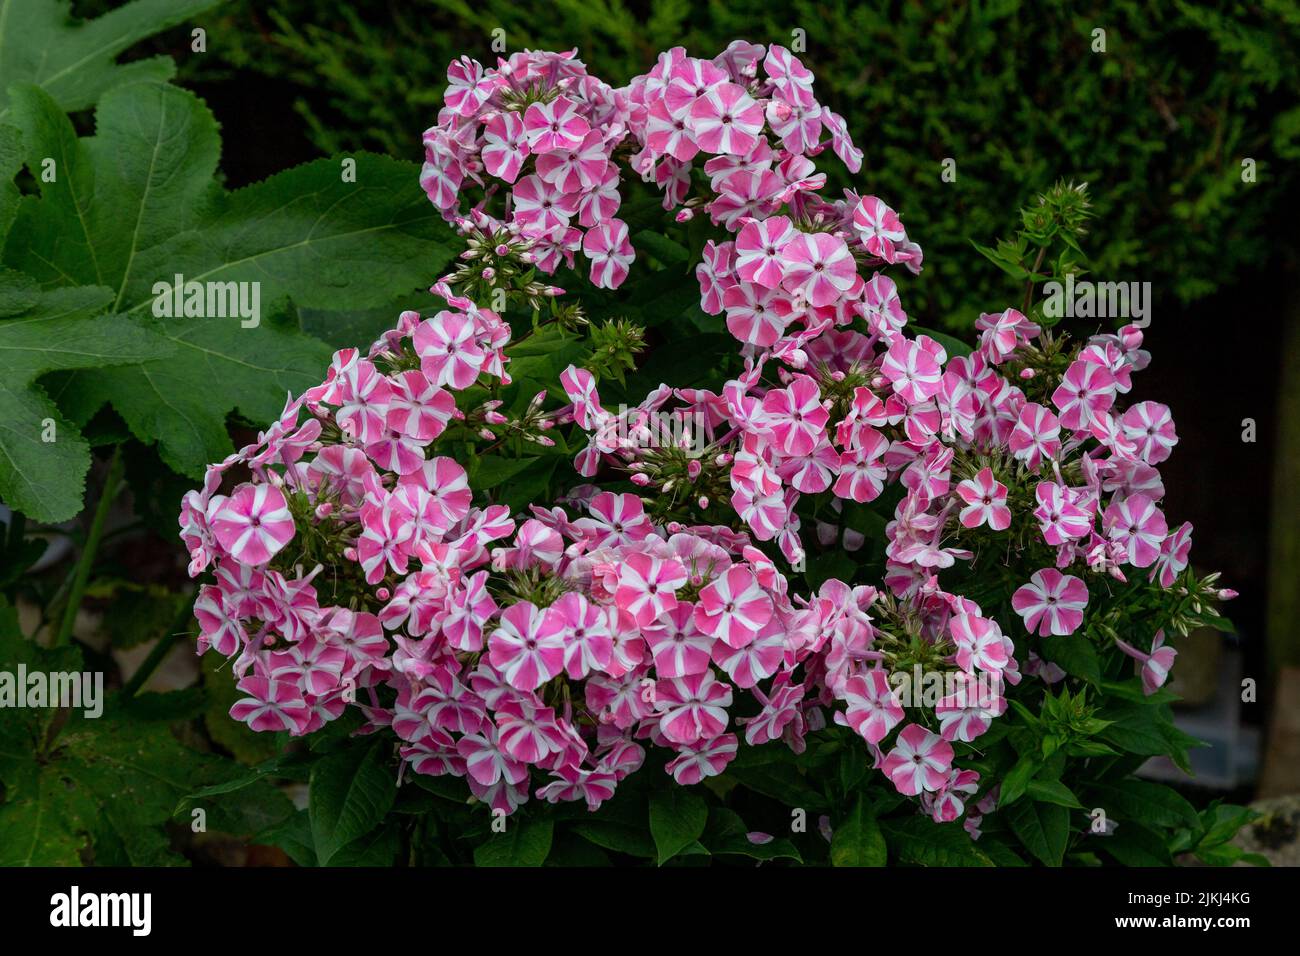 Phlox paniculata 'Peppermint Twist' in flower. Garden Phlox. Stock Photo